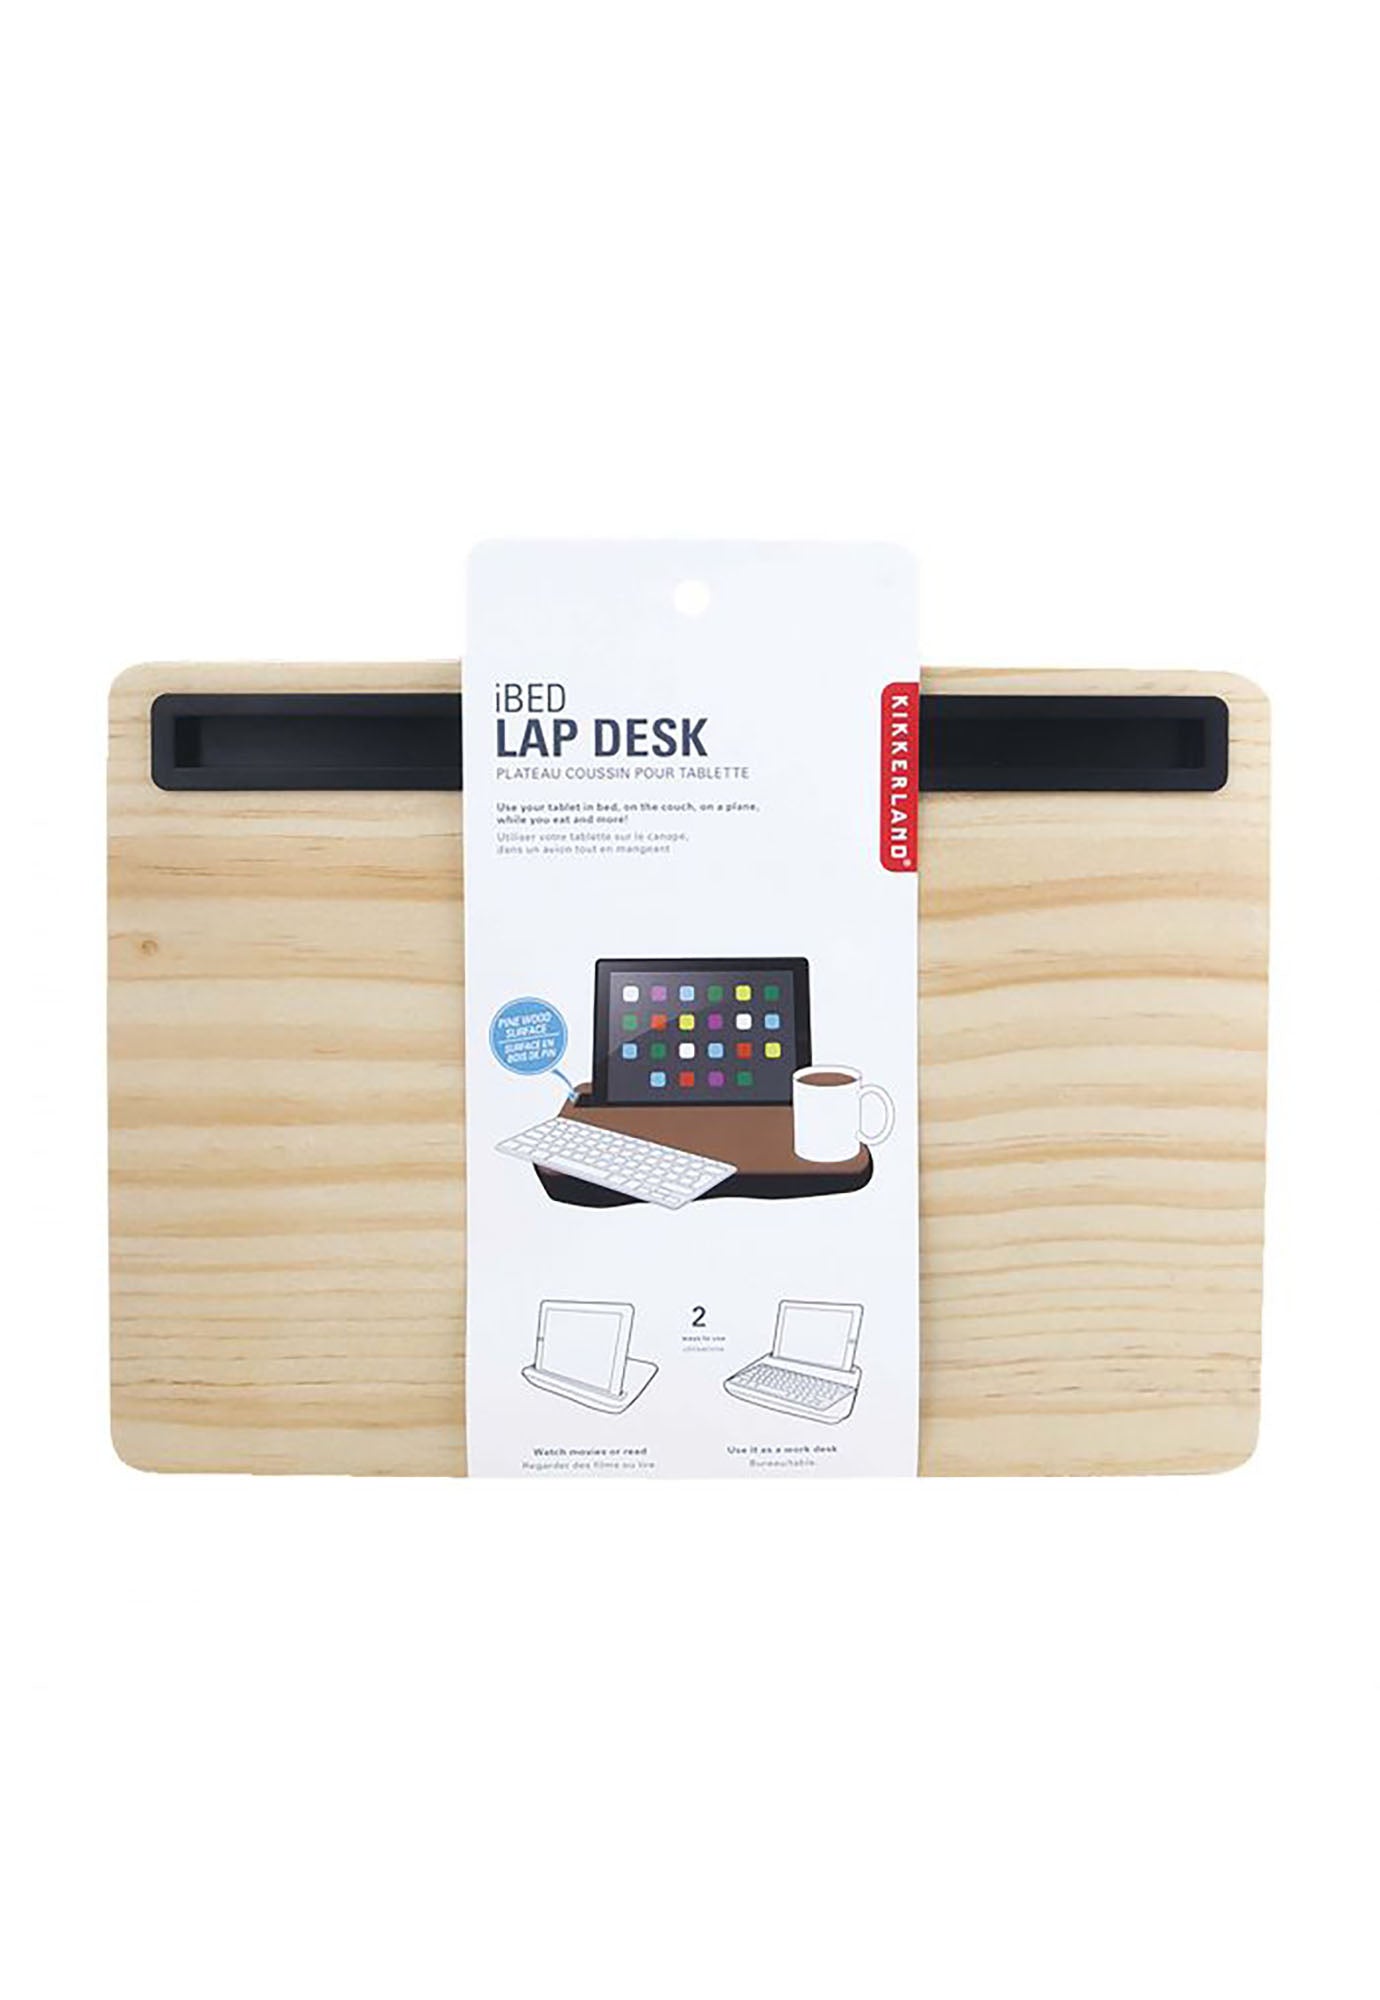 iBed lap desk - large